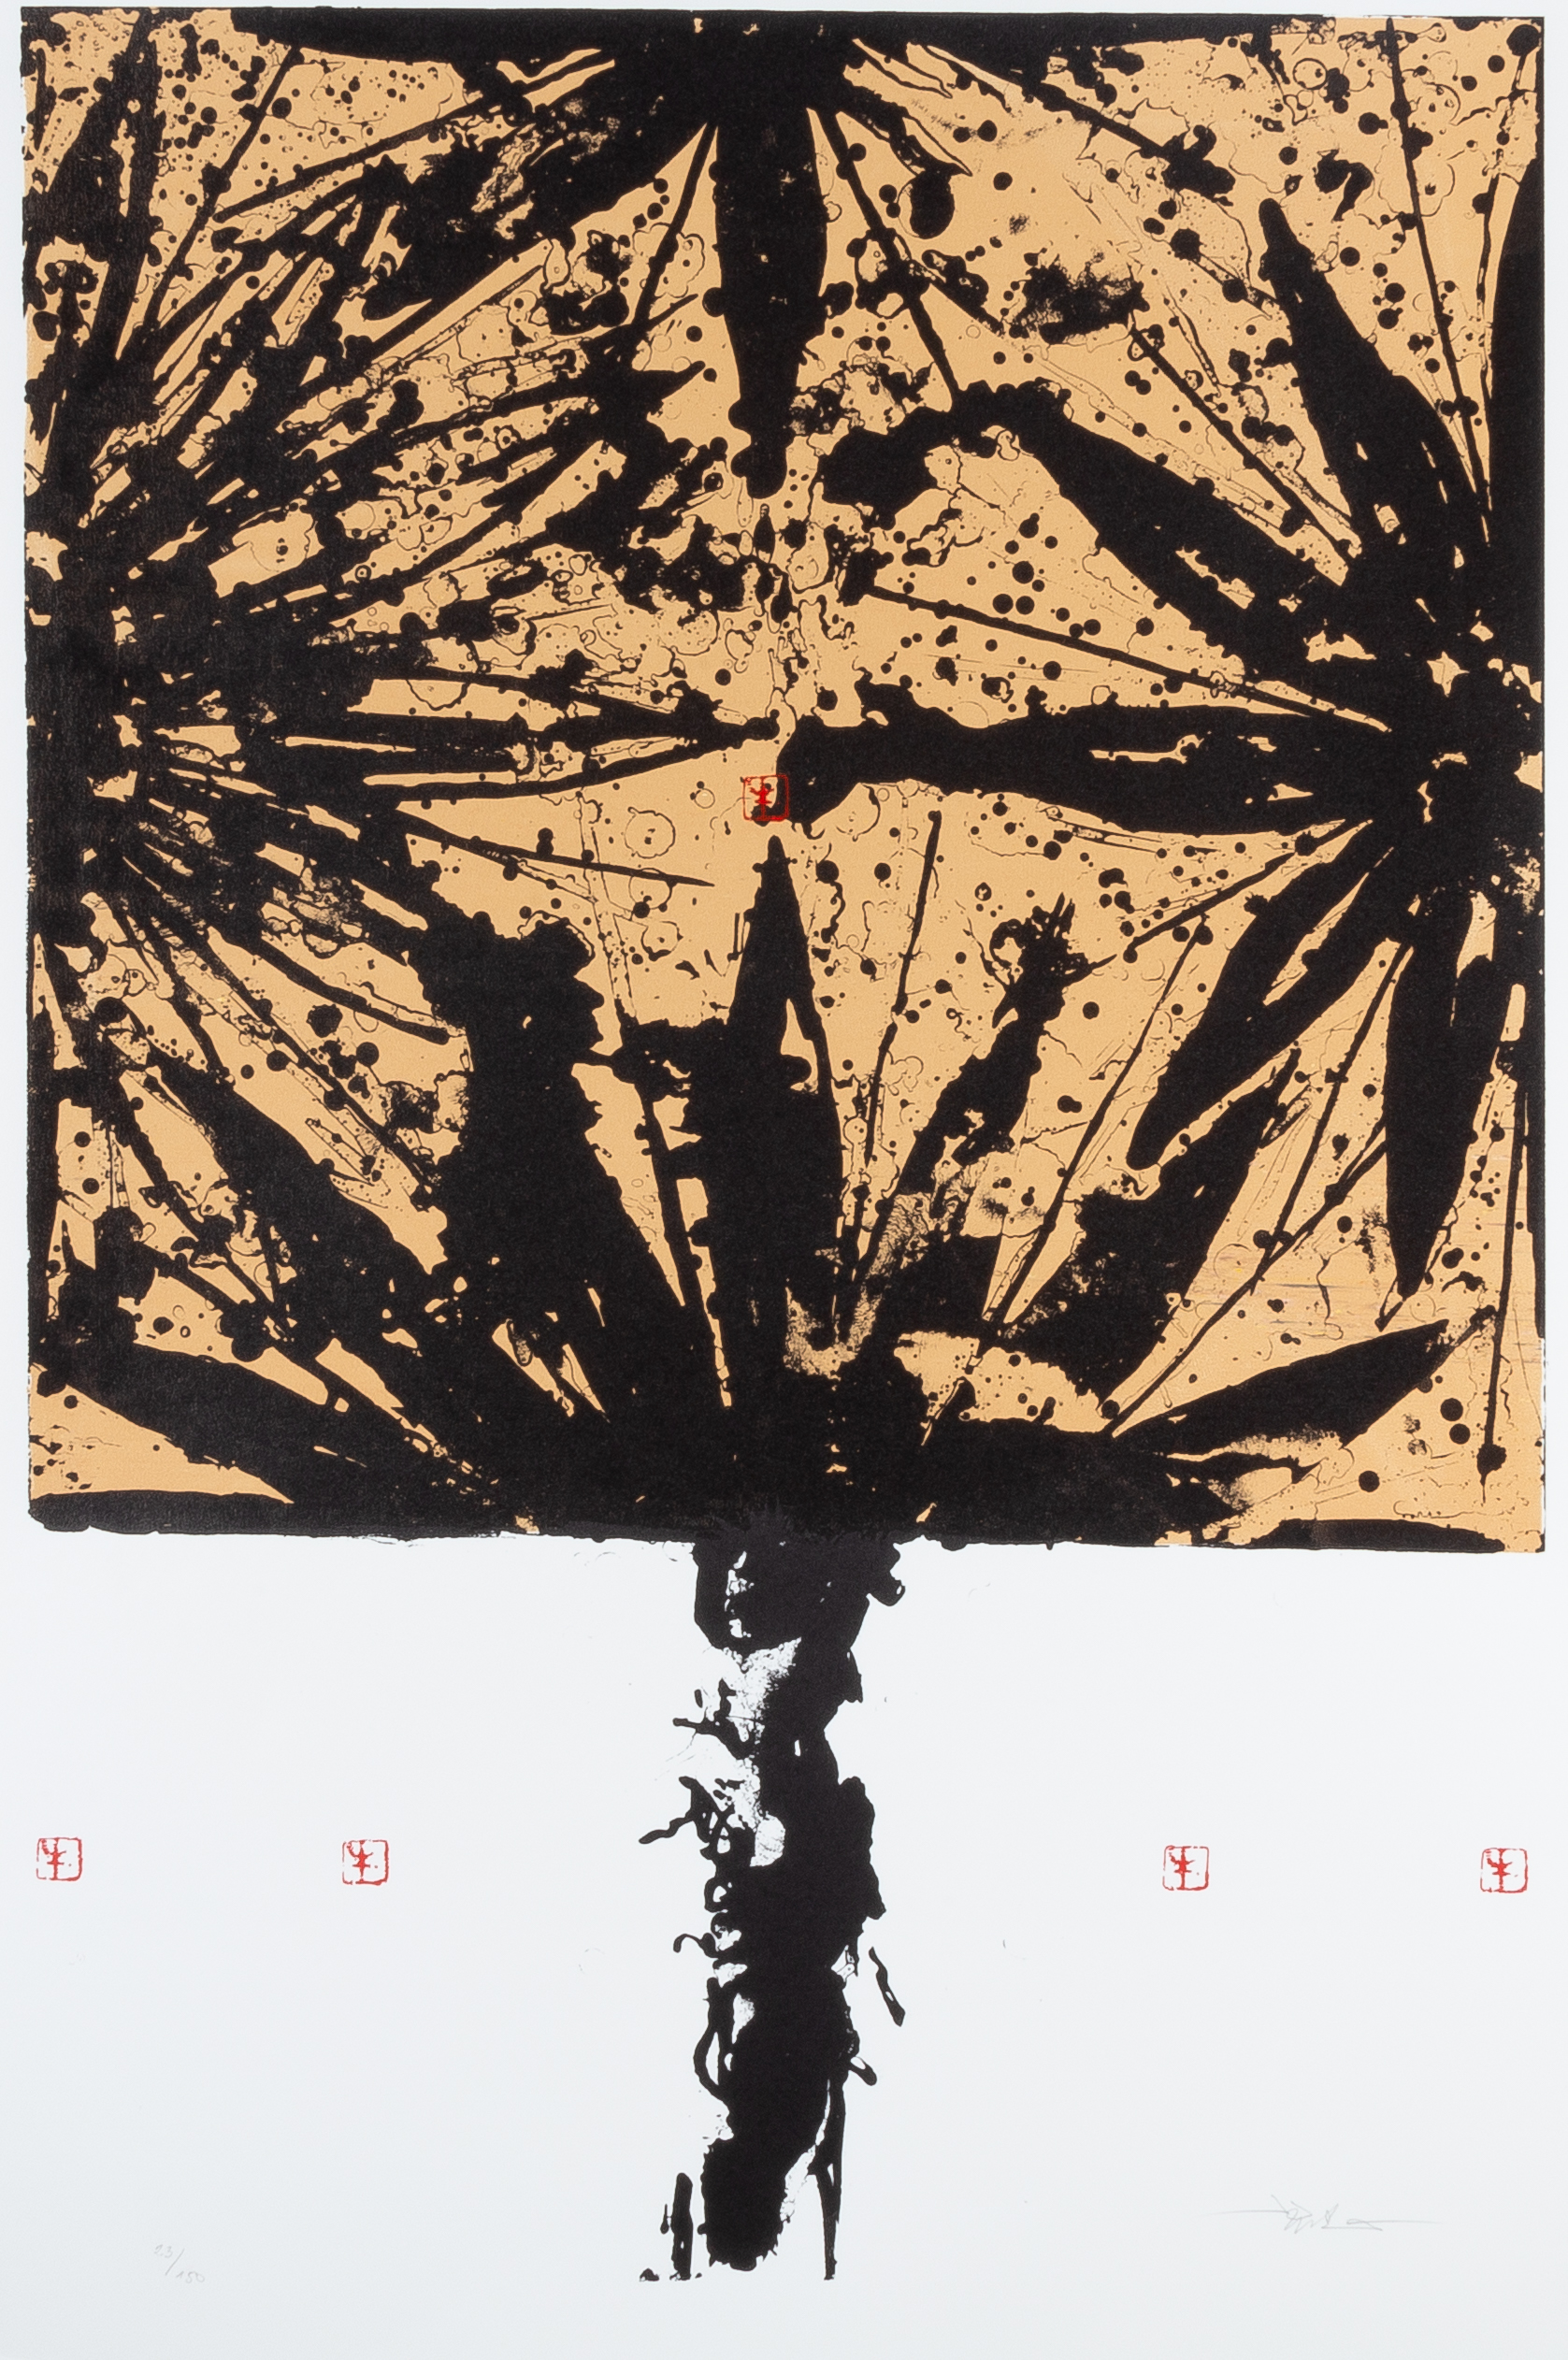 Sunflowers - Moderato Cantabile, 1999 Liu Jian Lithograph, 38"x 25.25" 2021.1.15